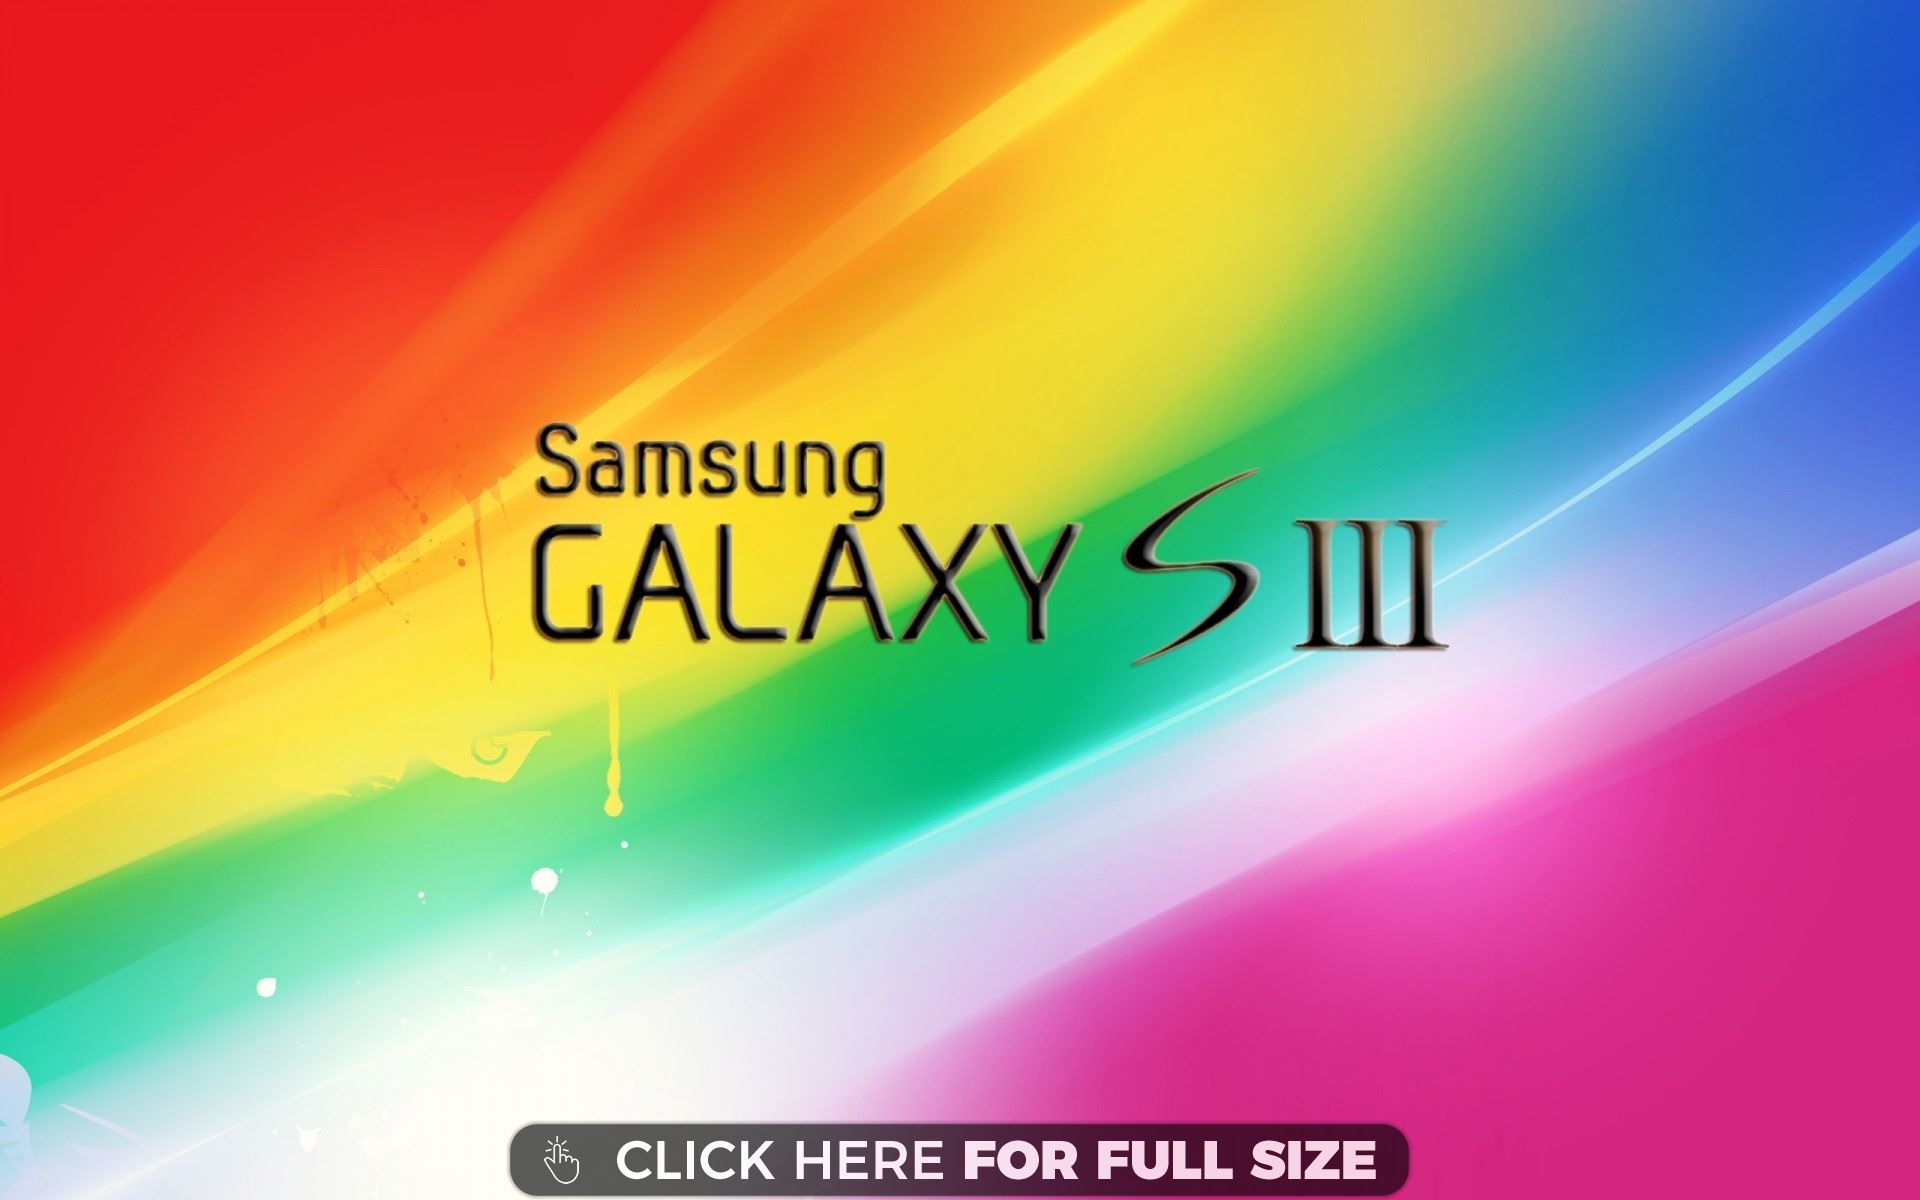 Samsung HD Wallpaper And Desktop Background Up